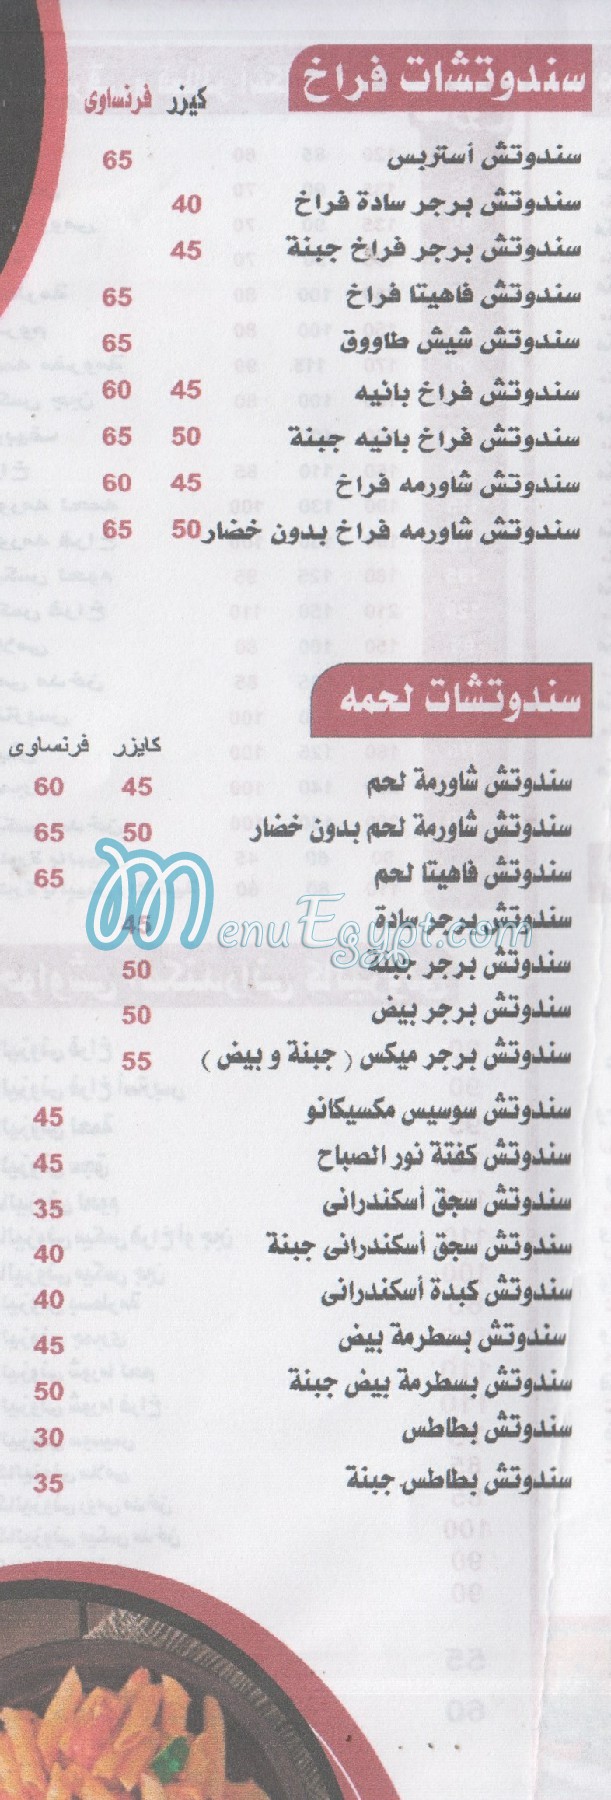 Nour El Sabah online menu